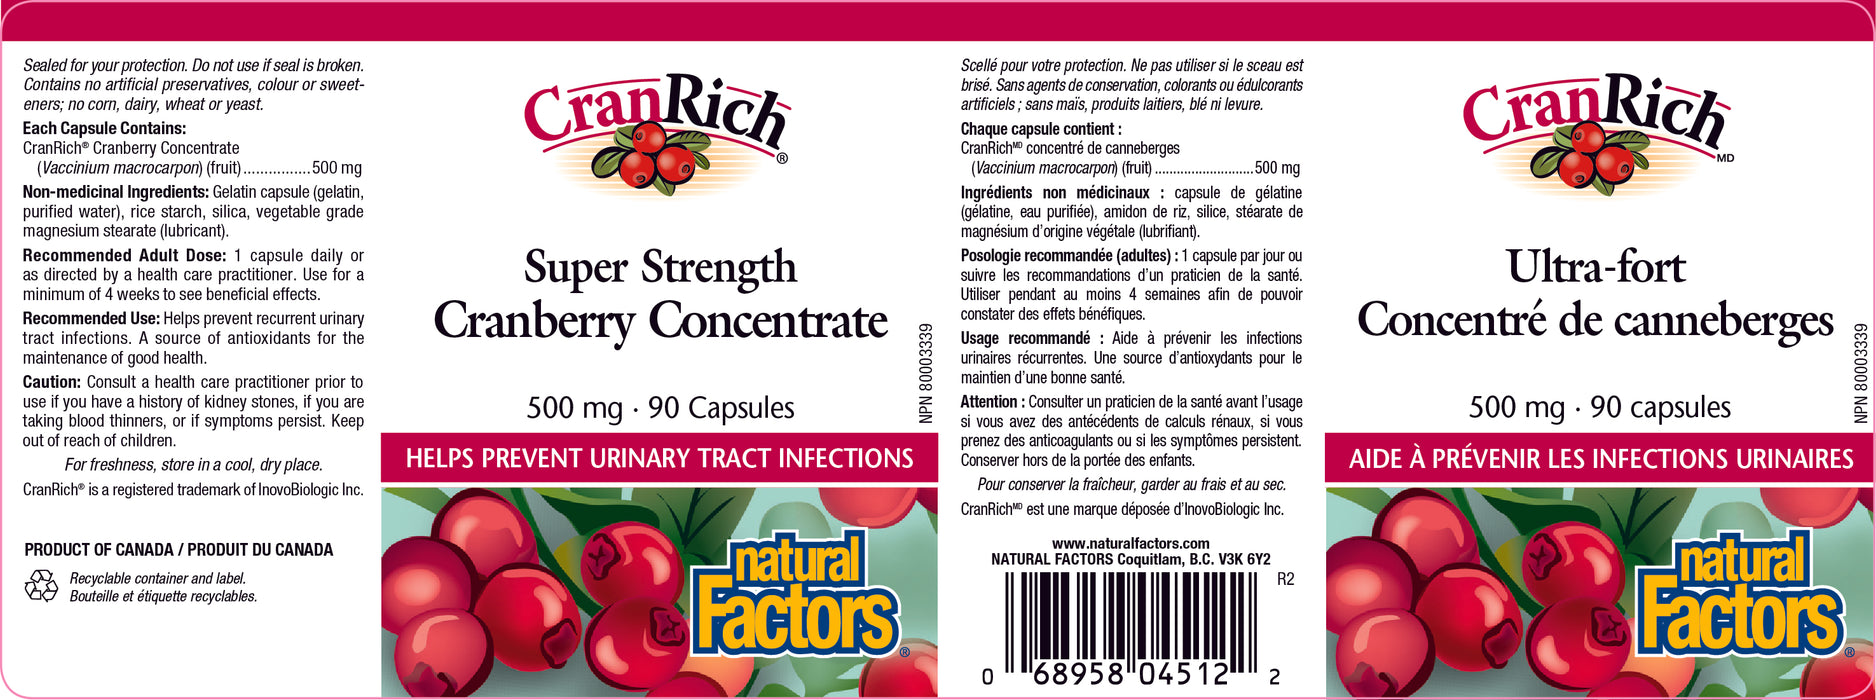 Natural Factors CranRich Super Strength Cranberry Concentrate 500 mg 90 Gelatin Capsules